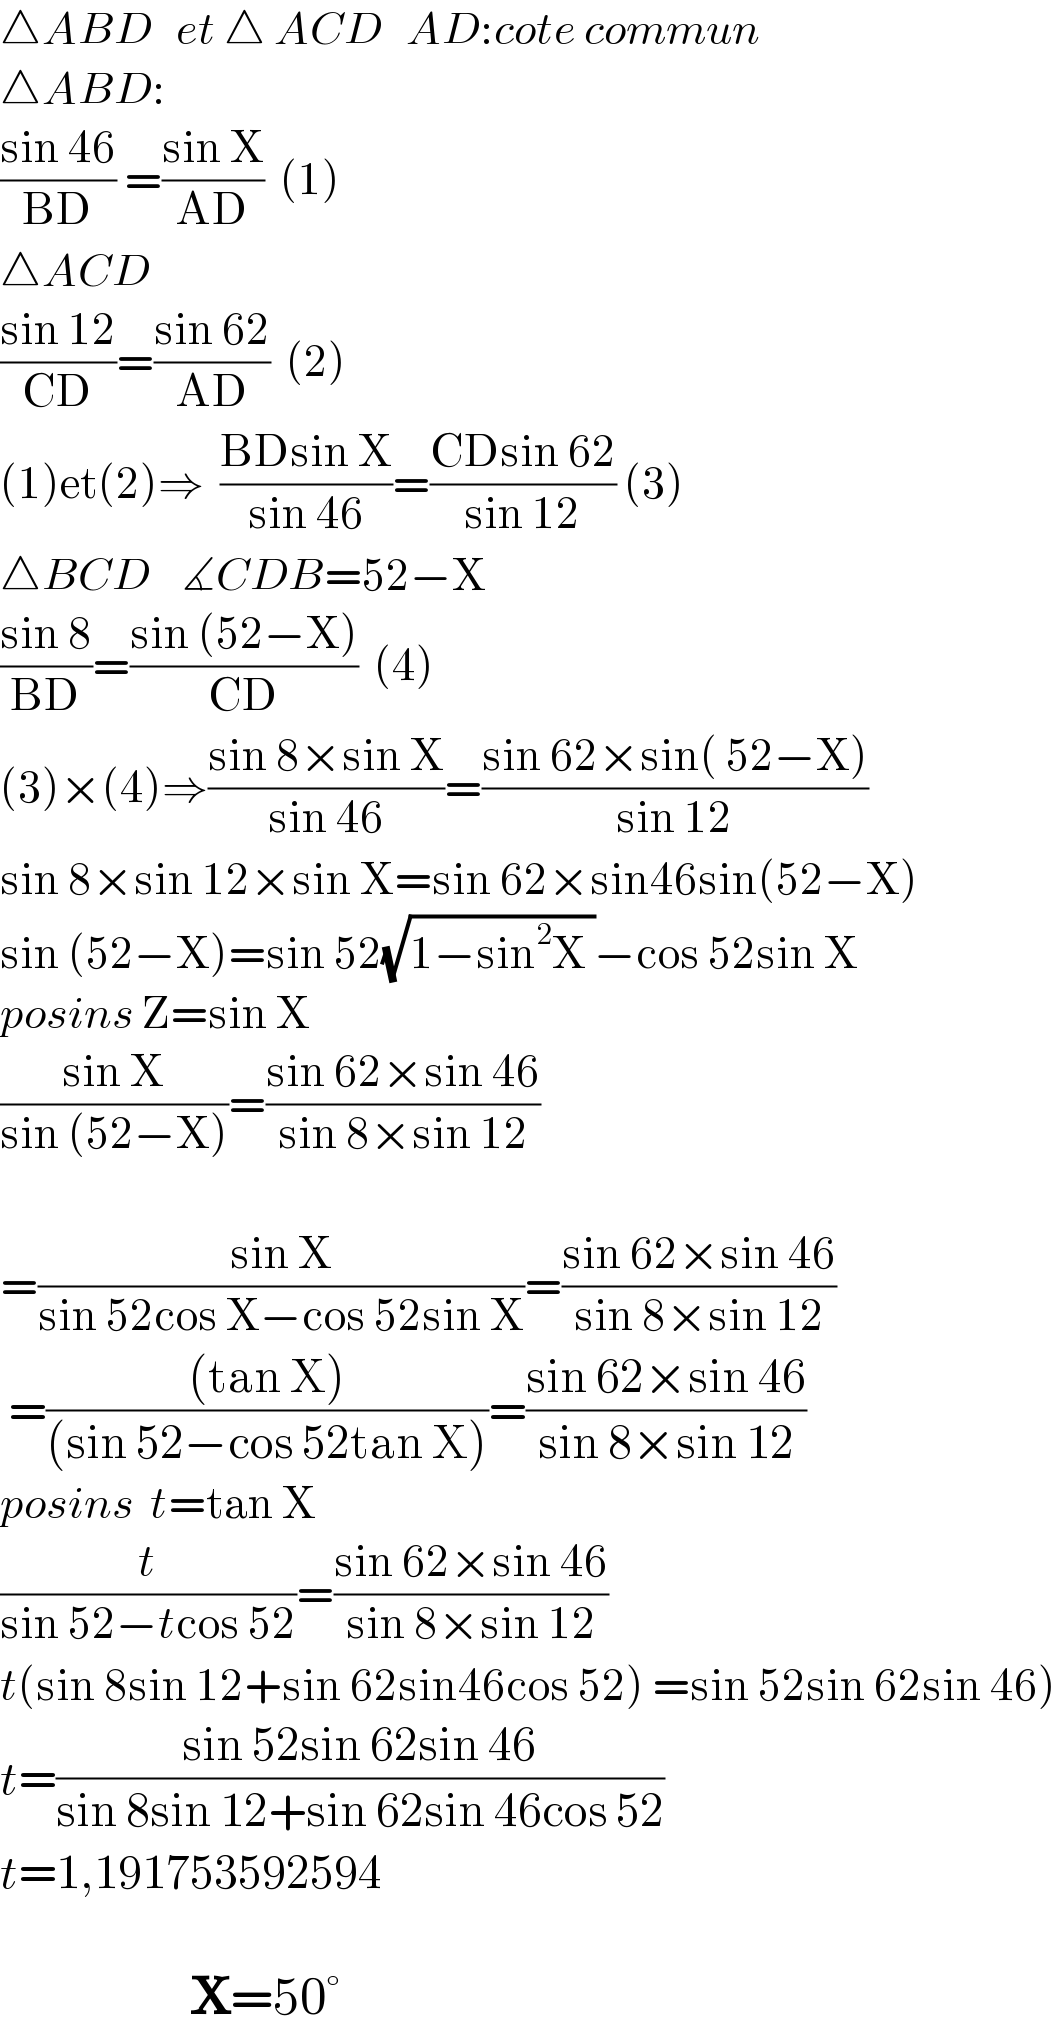 △ABD   et △ ACD   AD:cote commun  △ABD:    ((sin 46)/(BD)) =((sin X)/(AD))  (1)  △ACD  ((sin 12)/(CD))=((sin 62)/(AD))  (2)  (1)et(2)⇒  ((BDsin X)/(sin 46))=((CDsin 62)/(sin 12)) (3)  △BCD    ∡CDB=52−X  ((sin 8)/(BD))=((sin (52−X))/(CD))  (4)  (3)×(4)⇒((sin 8×sin X)/(sin 46))=((sin 62×sin( 52−X))/(sin 12))  sin 8×sin 12×sin X=sin 62×sin46sin(52−X)    sin (52−X)=sin 52(√(1−sin^2 X ))−cos 52sin X  posins Z=sin X   ((sin X)/(sin (52−X)))=((sin 62×sin 46)/(sin 8×sin 12))    =((sin X)/(sin 52cos X−cos 52sin X))=((sin 62×sin 46)/(sin 8×sin 12))   =(((tan X))/((sin 52−cos 52tan X)))=((sin 62×sin 46)/(sin 8×sin 12))  posins  t=tan X  (t/(sin 52−tcos 52))=((sin 62×sin 46)/(sin 8×sin 12))  t(sin 8sin 12+sin 62sin46cos 52) =sin 52sin 62sin 46)  t=((sin 52sin 62sin 46)/(sin 8sin 12+sin 62sin 46cos 52))  t=1,191753592594                       X=50°  